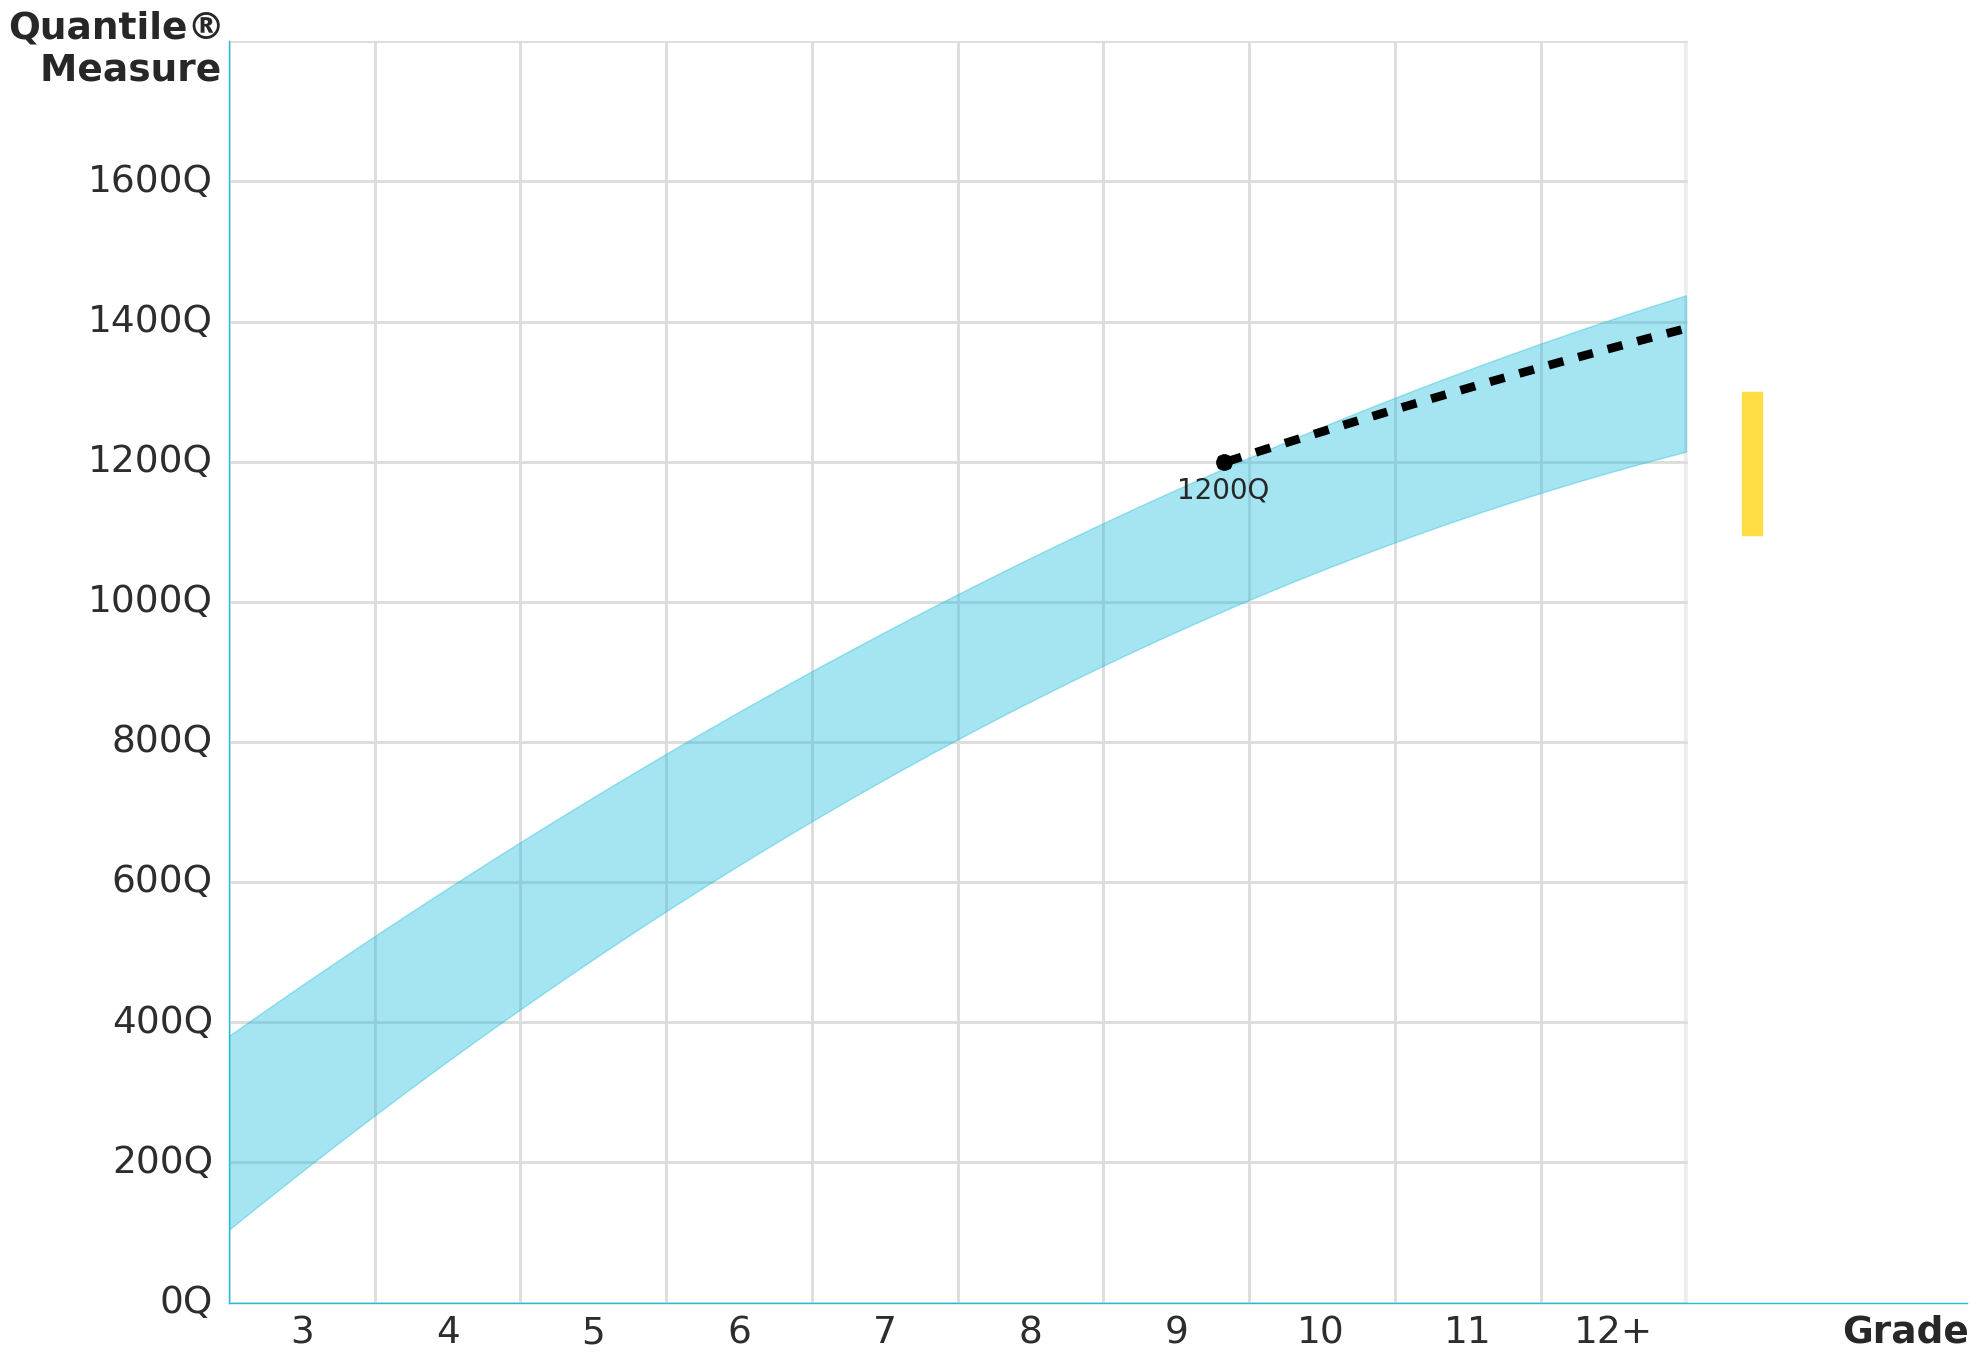 Single Quantile measure plotted on graph